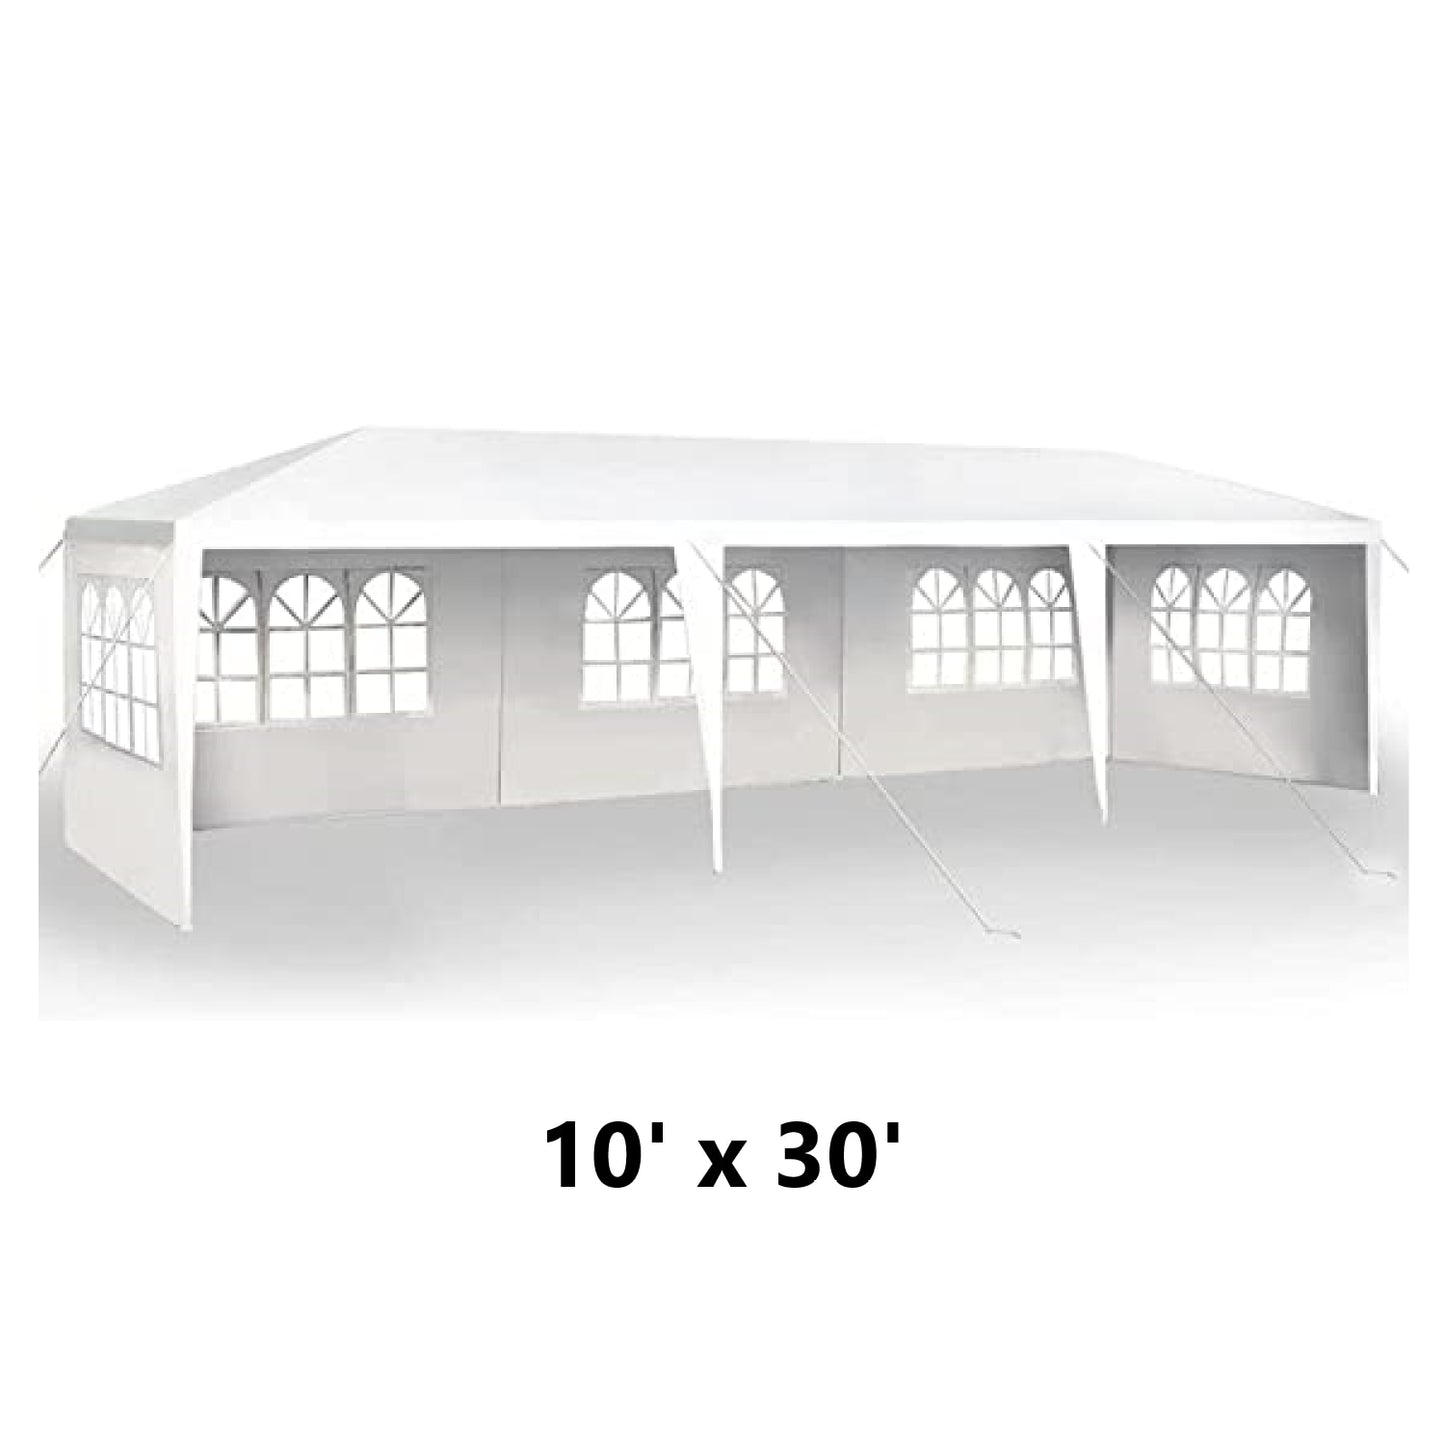 Outdoor Party Tent Wedding Patio Gazebo Canopy Tent White 3 Sizes